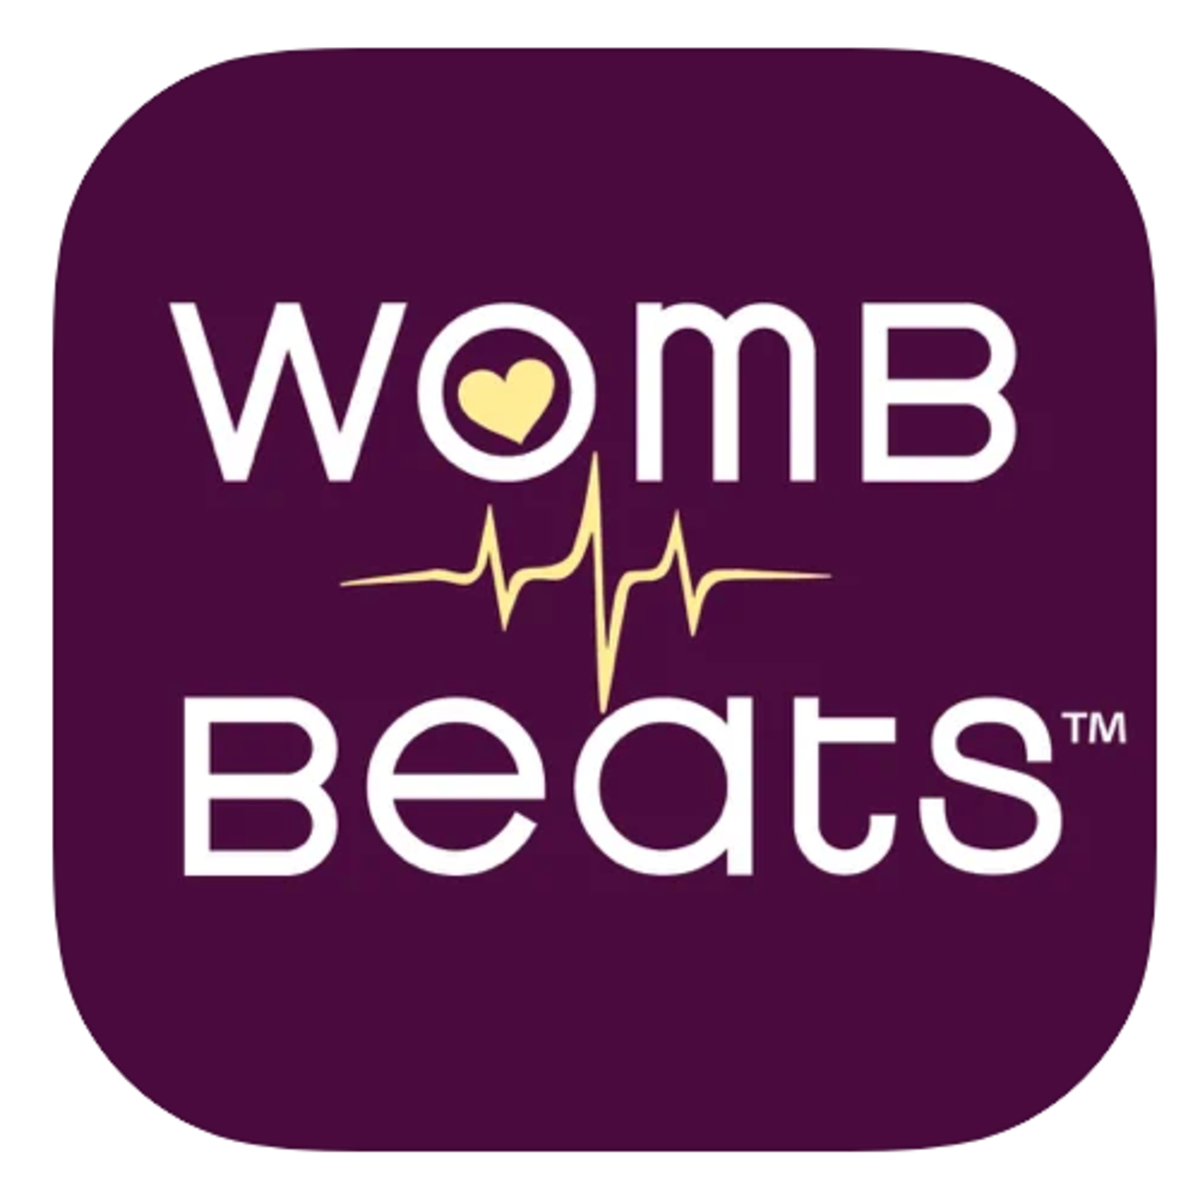 Womb Beats